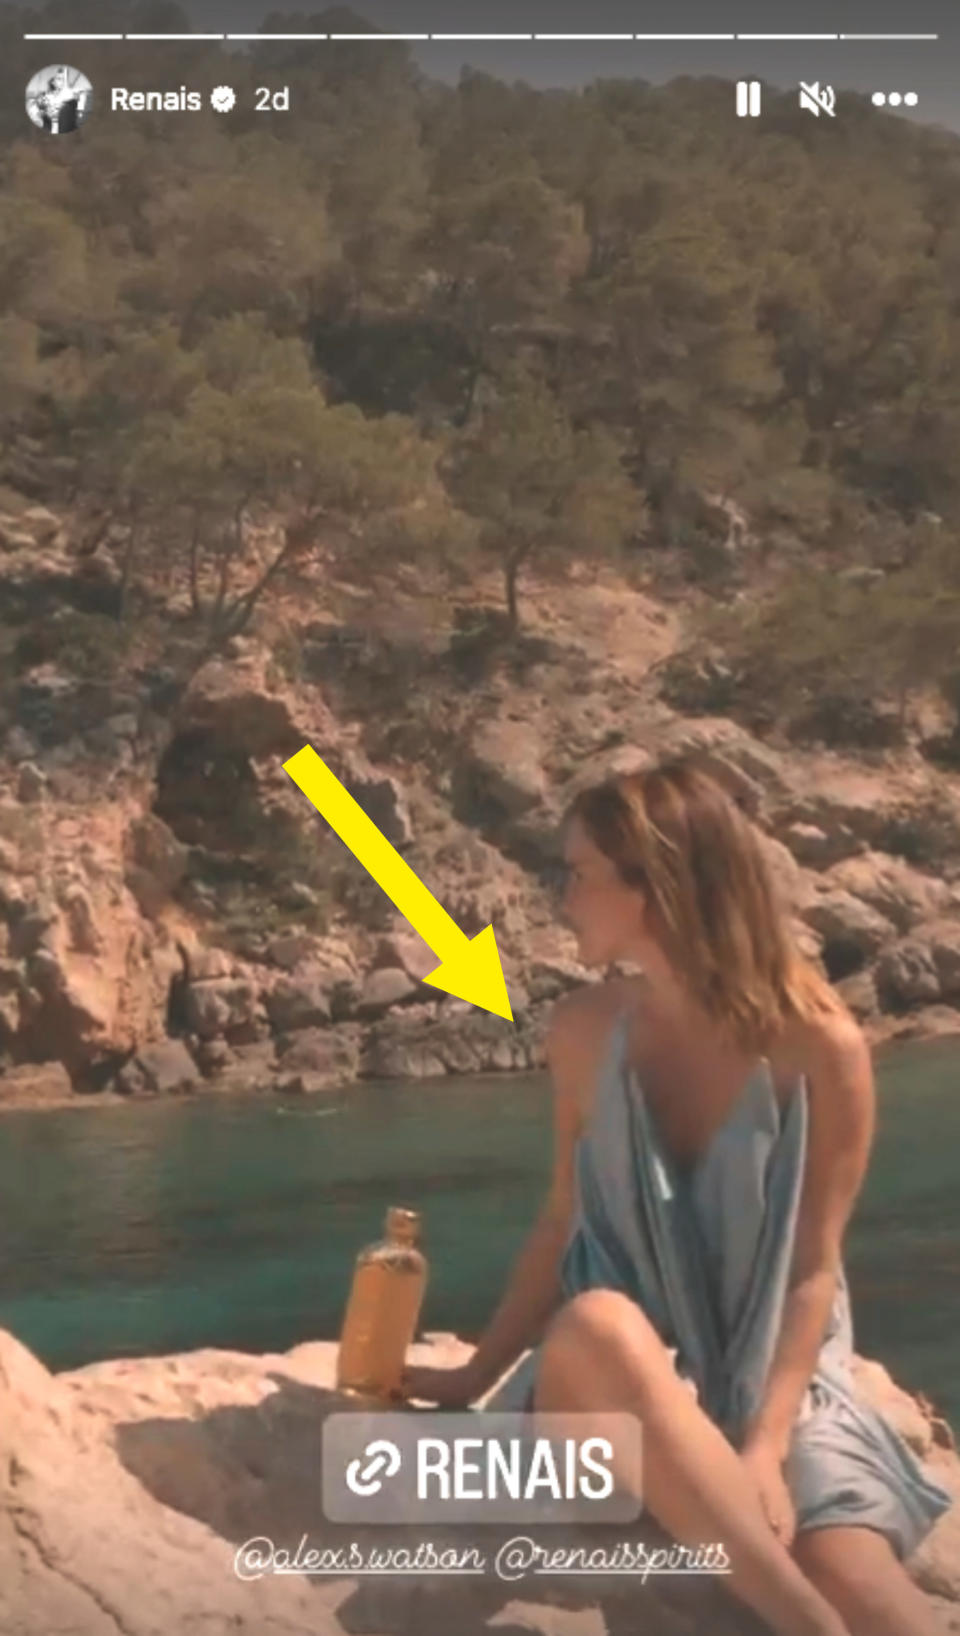 Arrow pointing to Emma Watson's blue dress